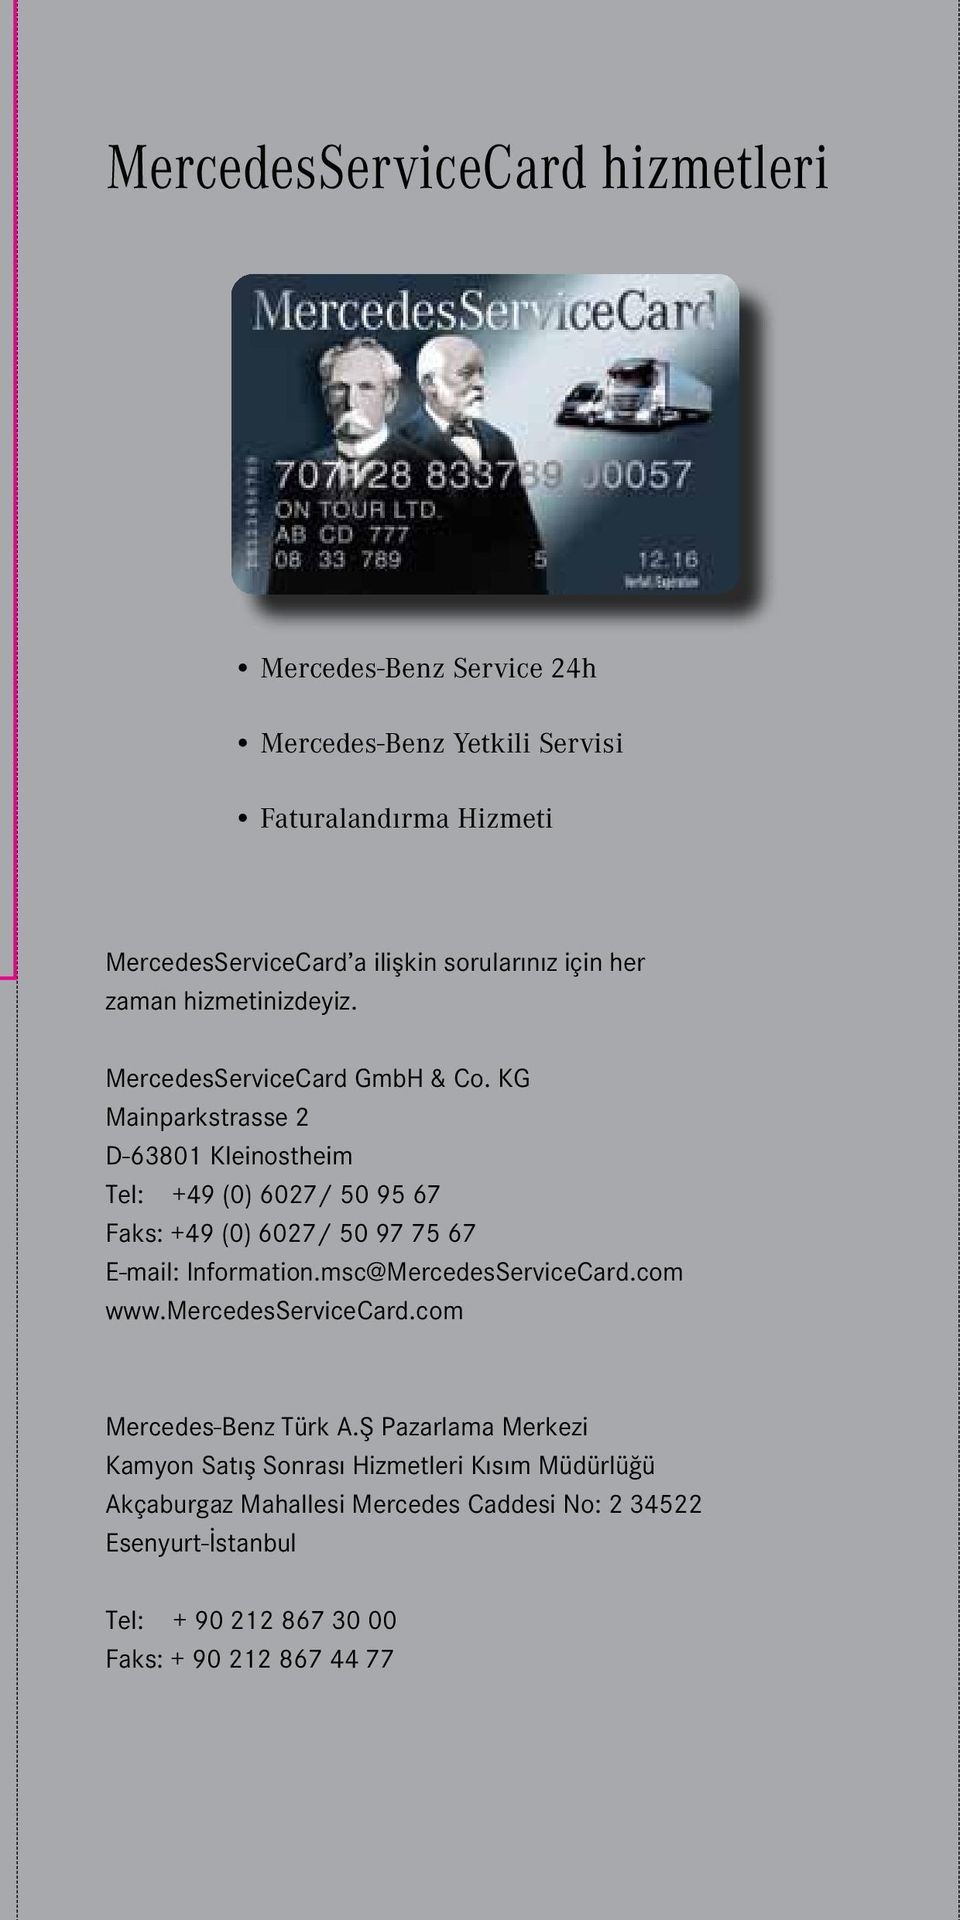 KG Mainparkstrasse 2 D-63801 Kleinostheim Tel: +49 (0) 6027/ 50 95 67 Faks: +49 (0) 6027/ 50 97 75 67 E-mail: Information.msc@MercedesServiceCard.